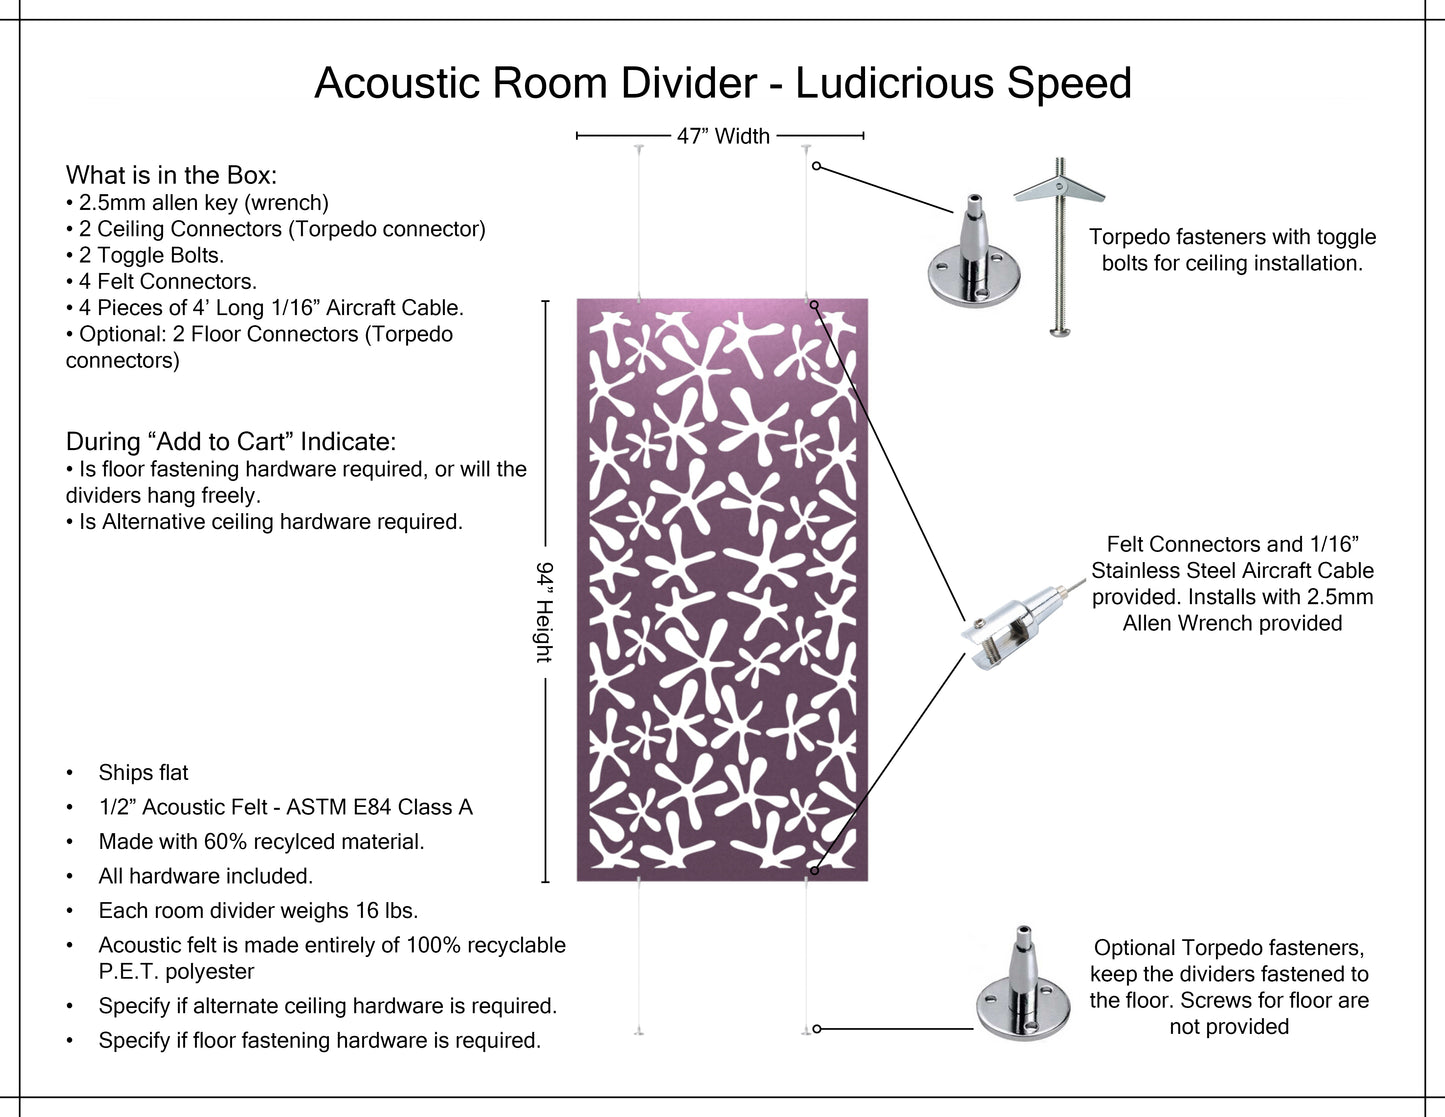 4x8 Acoustic Room Divider - Ludicious Speed